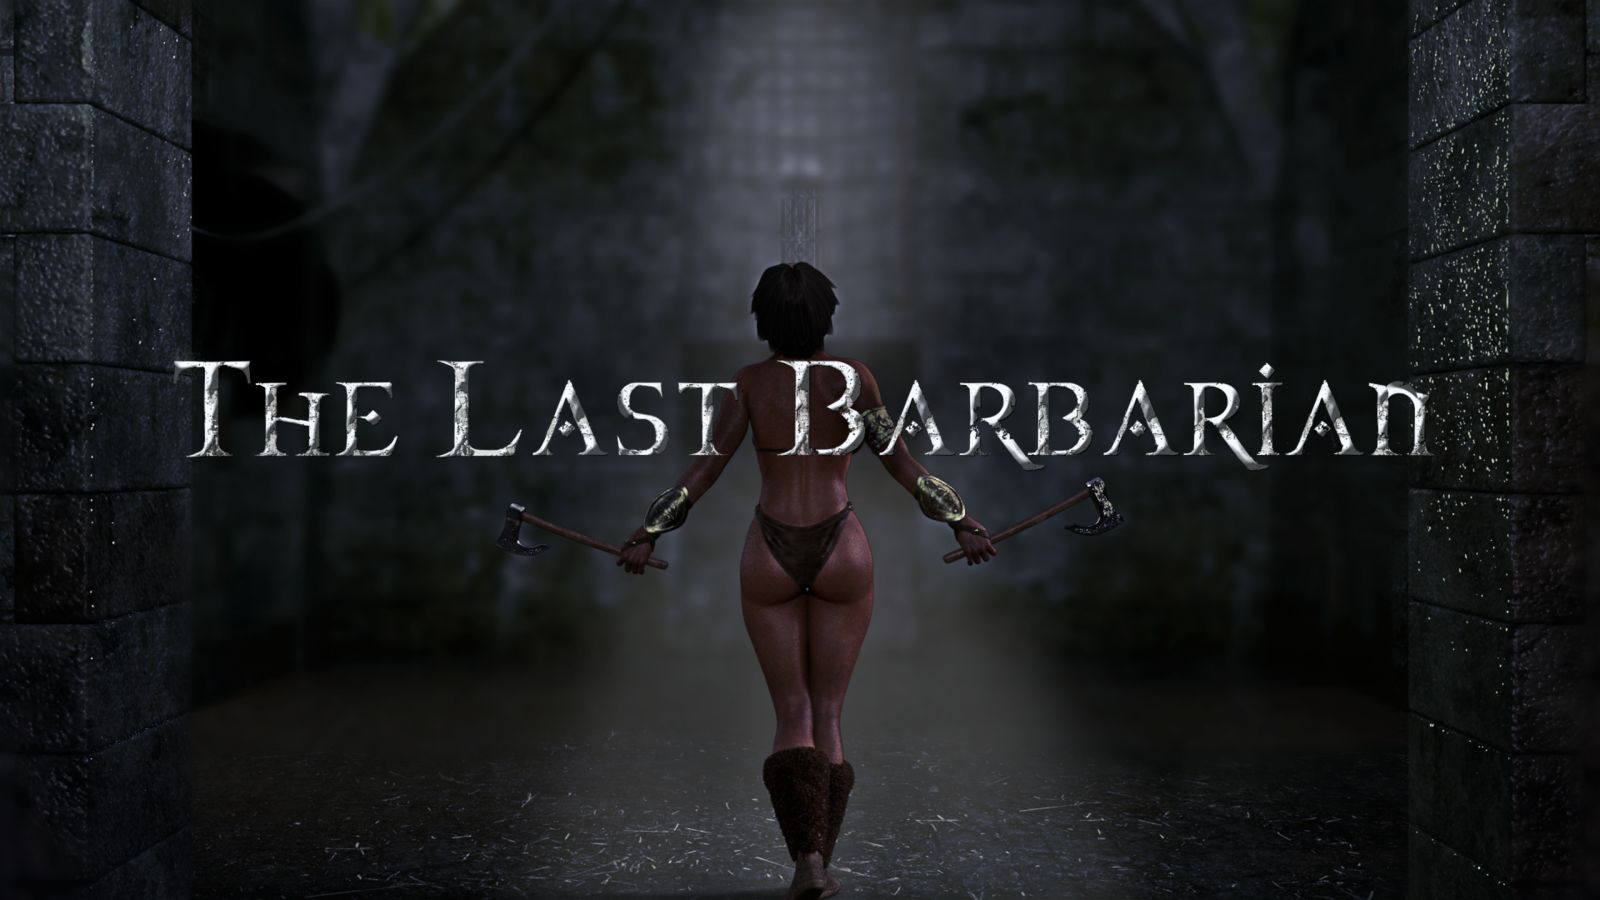 Barbariem Video - Unity] The Last Barbarian - v0.9.27.1 by Viktor Black 18+ Adult xxx Porn  Game Download